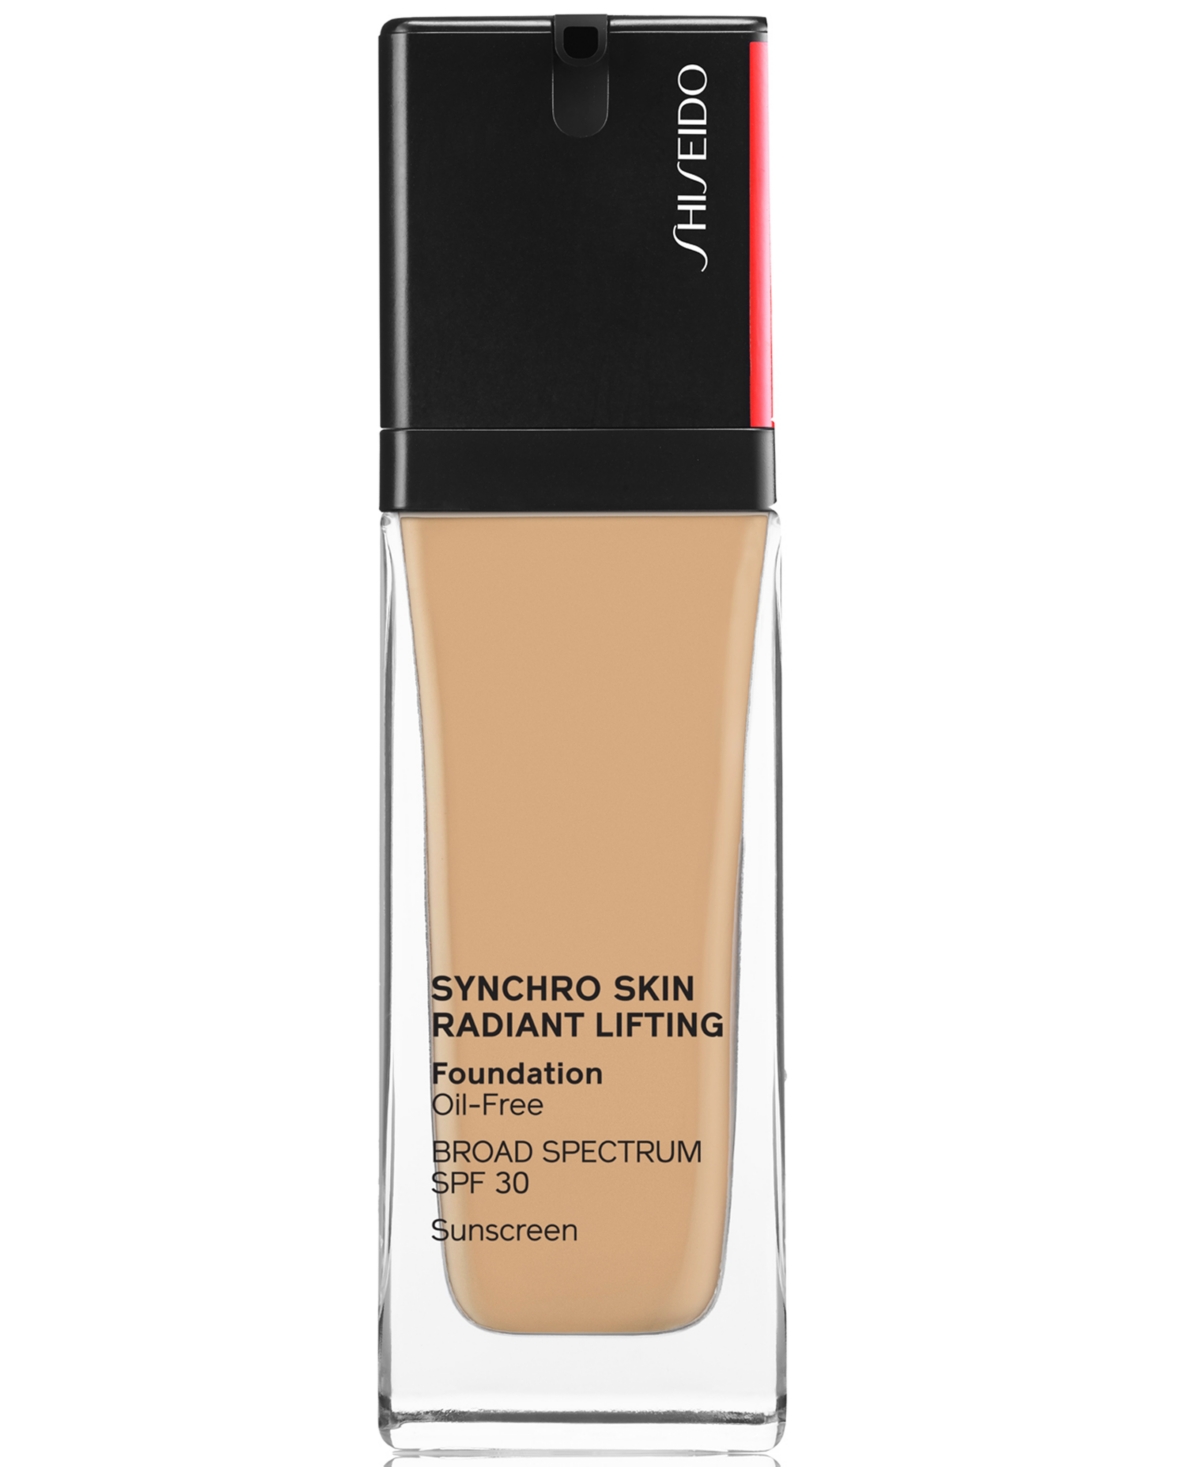 Shiseido Synchro Skin Radiant Lifting Foundation, 30 ml In Bamboo - Golden Tone For Medium Skin,go